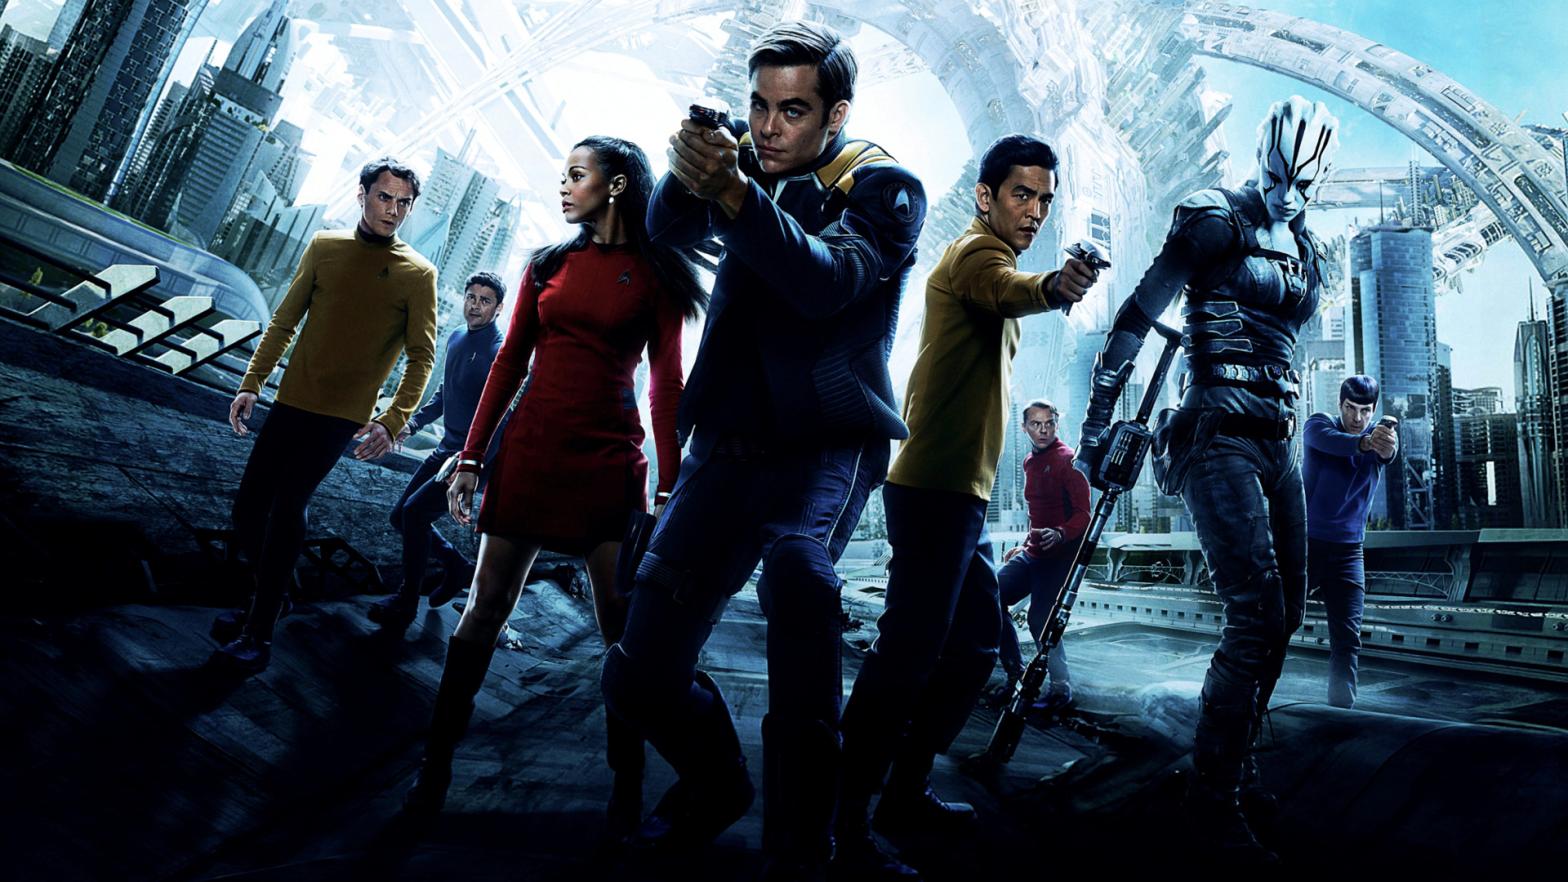 A poster for the most recent Star Trek film, Star Trek Beyond. (Image: Paramount)